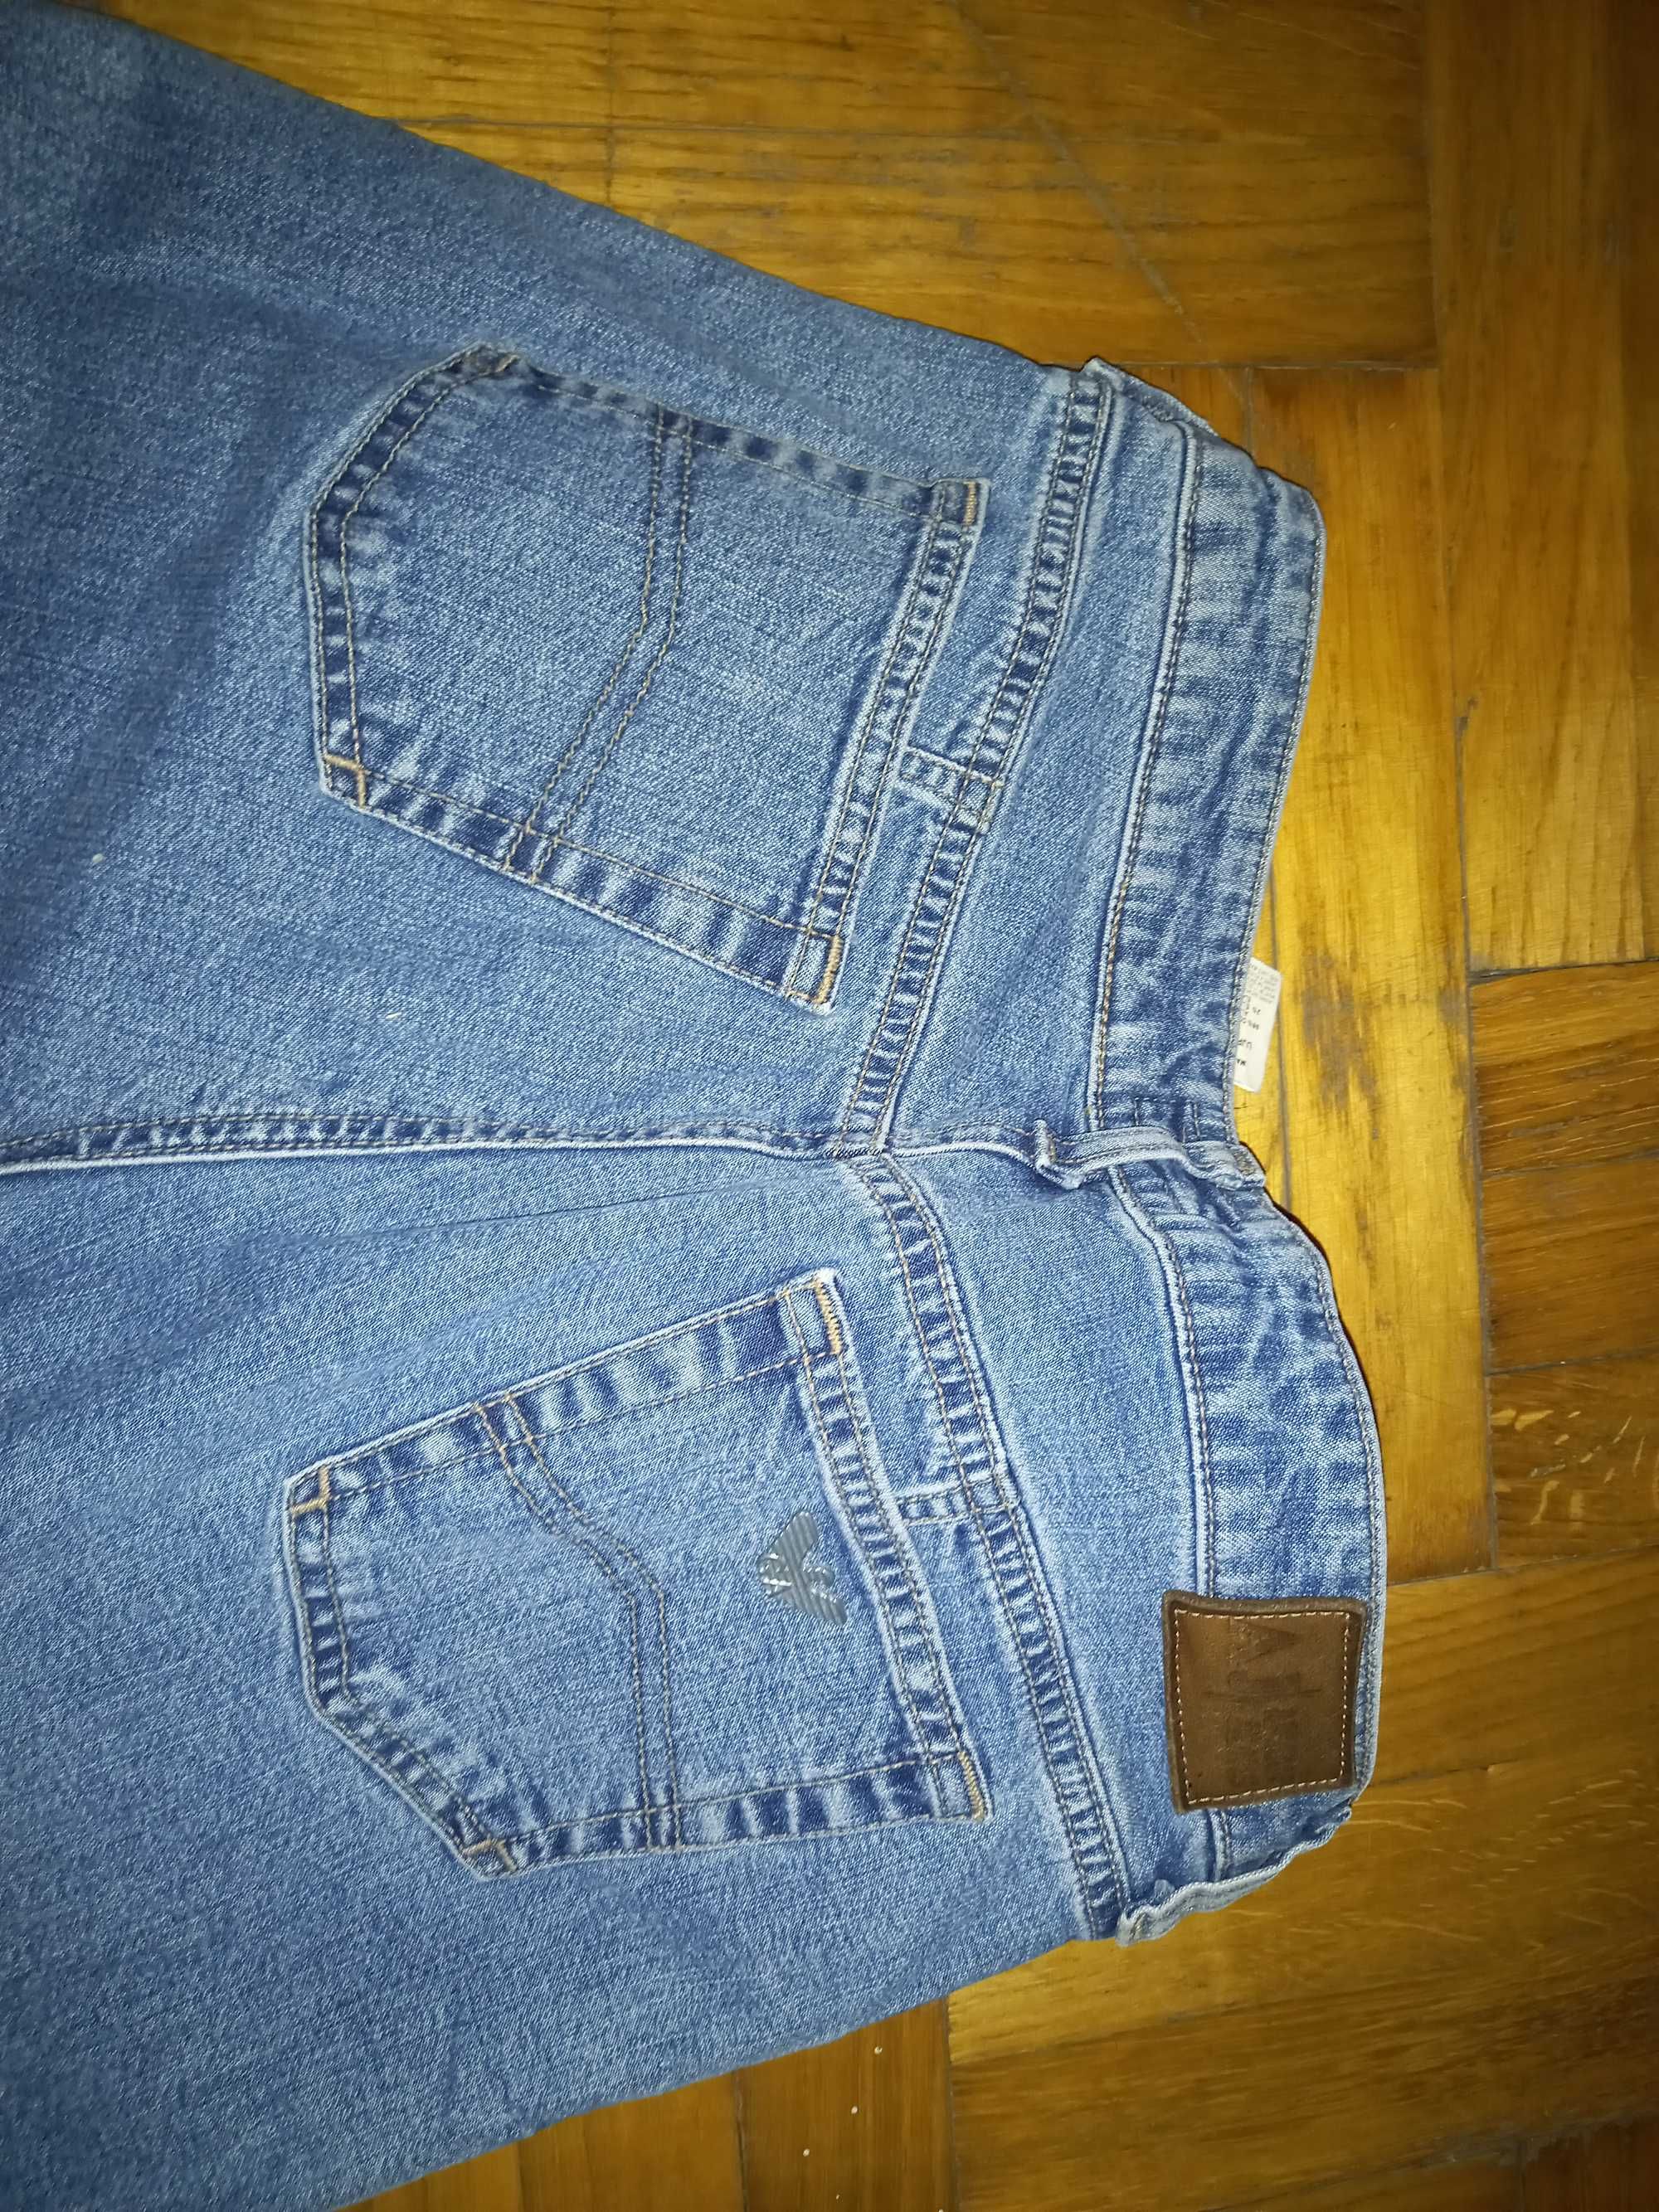 Spodnie jeansowe Lacoste, Armani, Tommy Hlilifinger